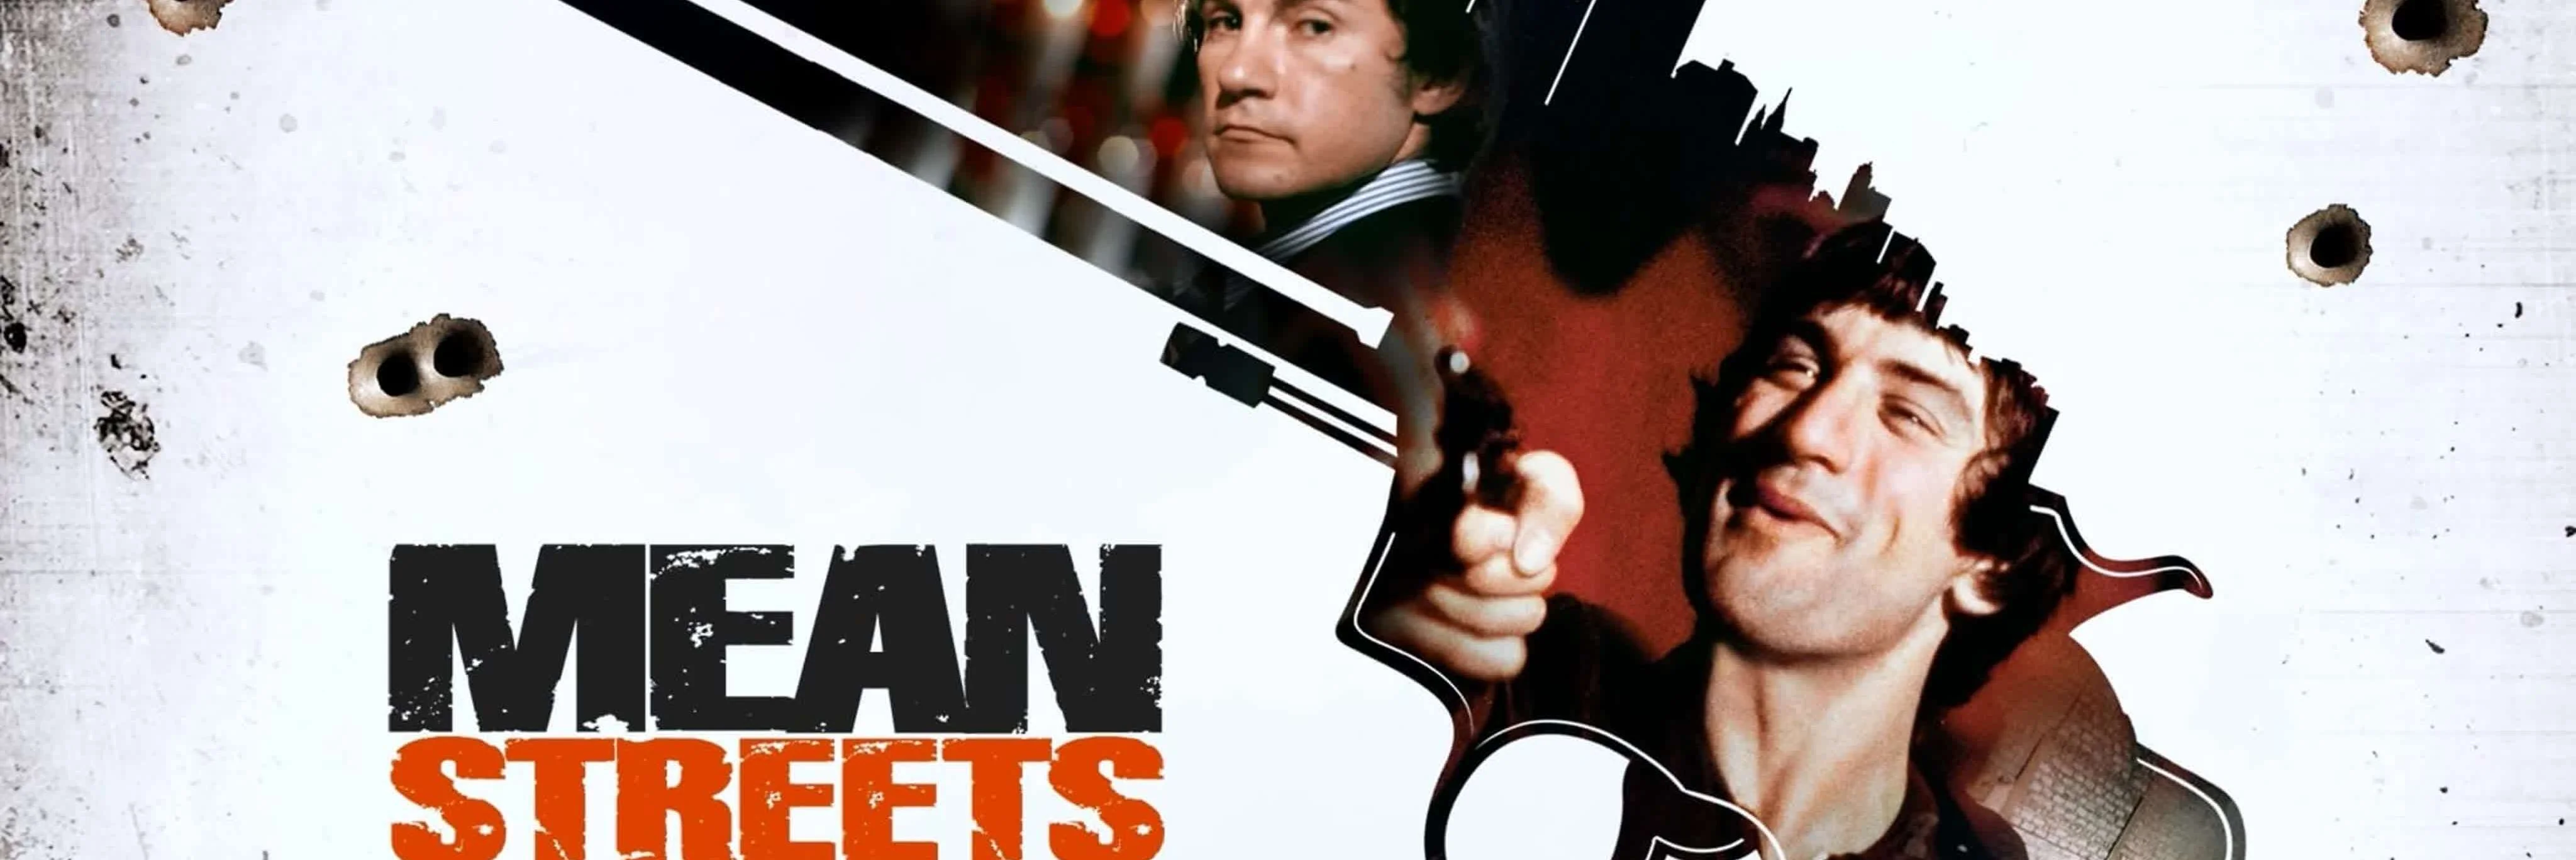 Mean Streets 4K 1973 big poster